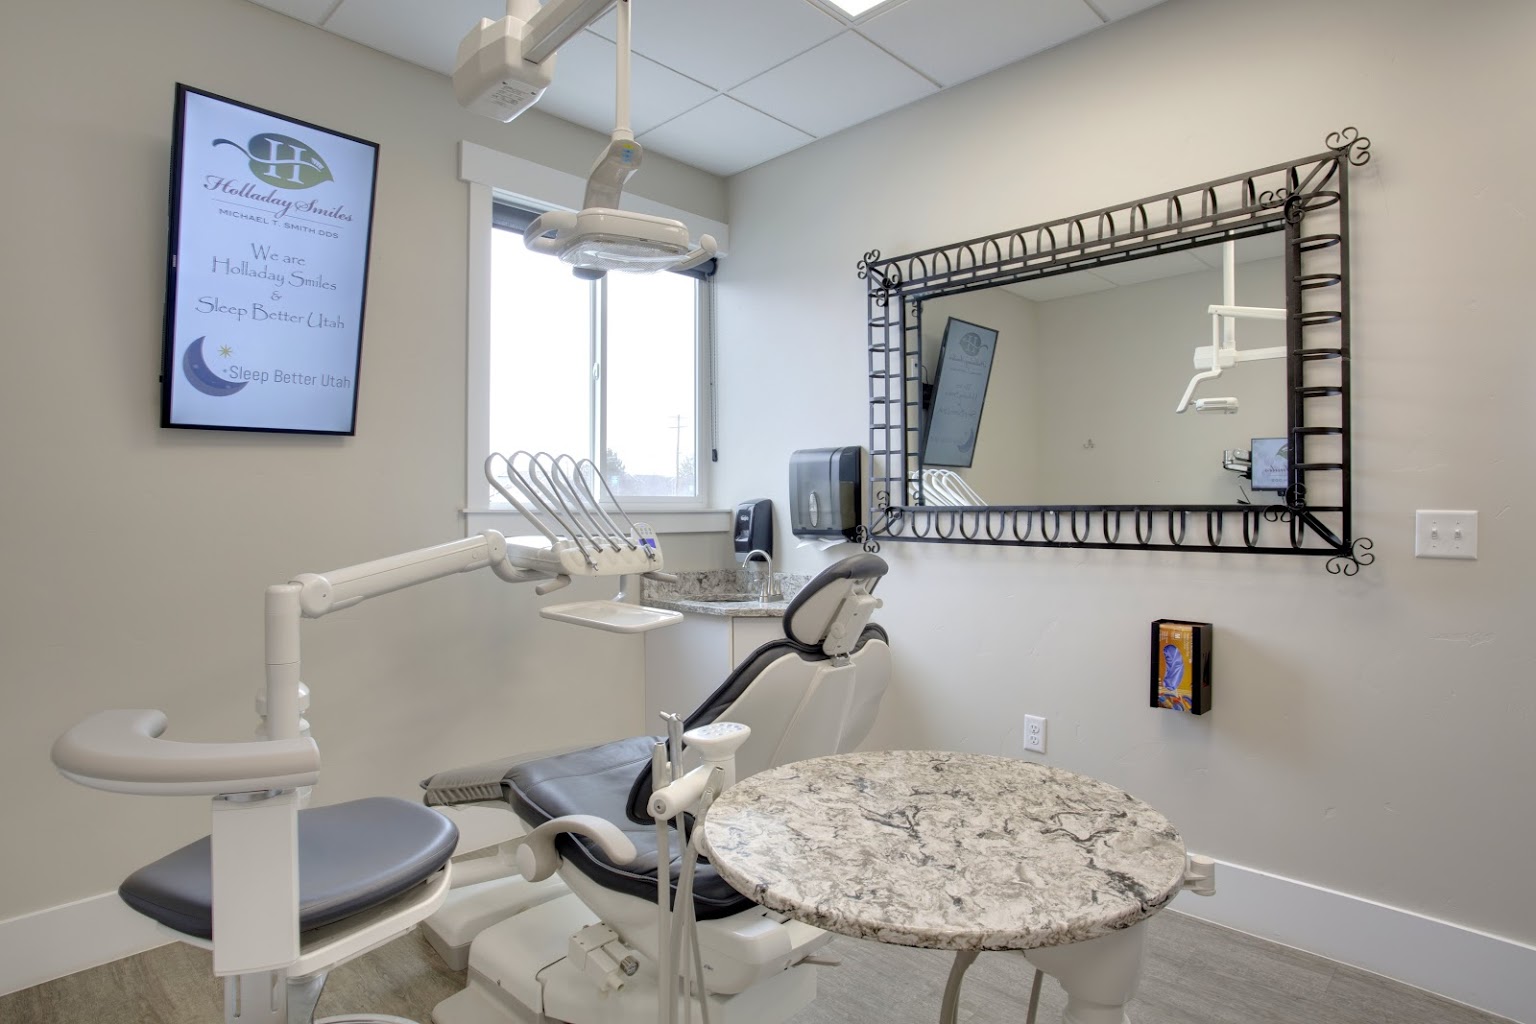 Holladay Smiles Dental clinic in Millcreek, Utah